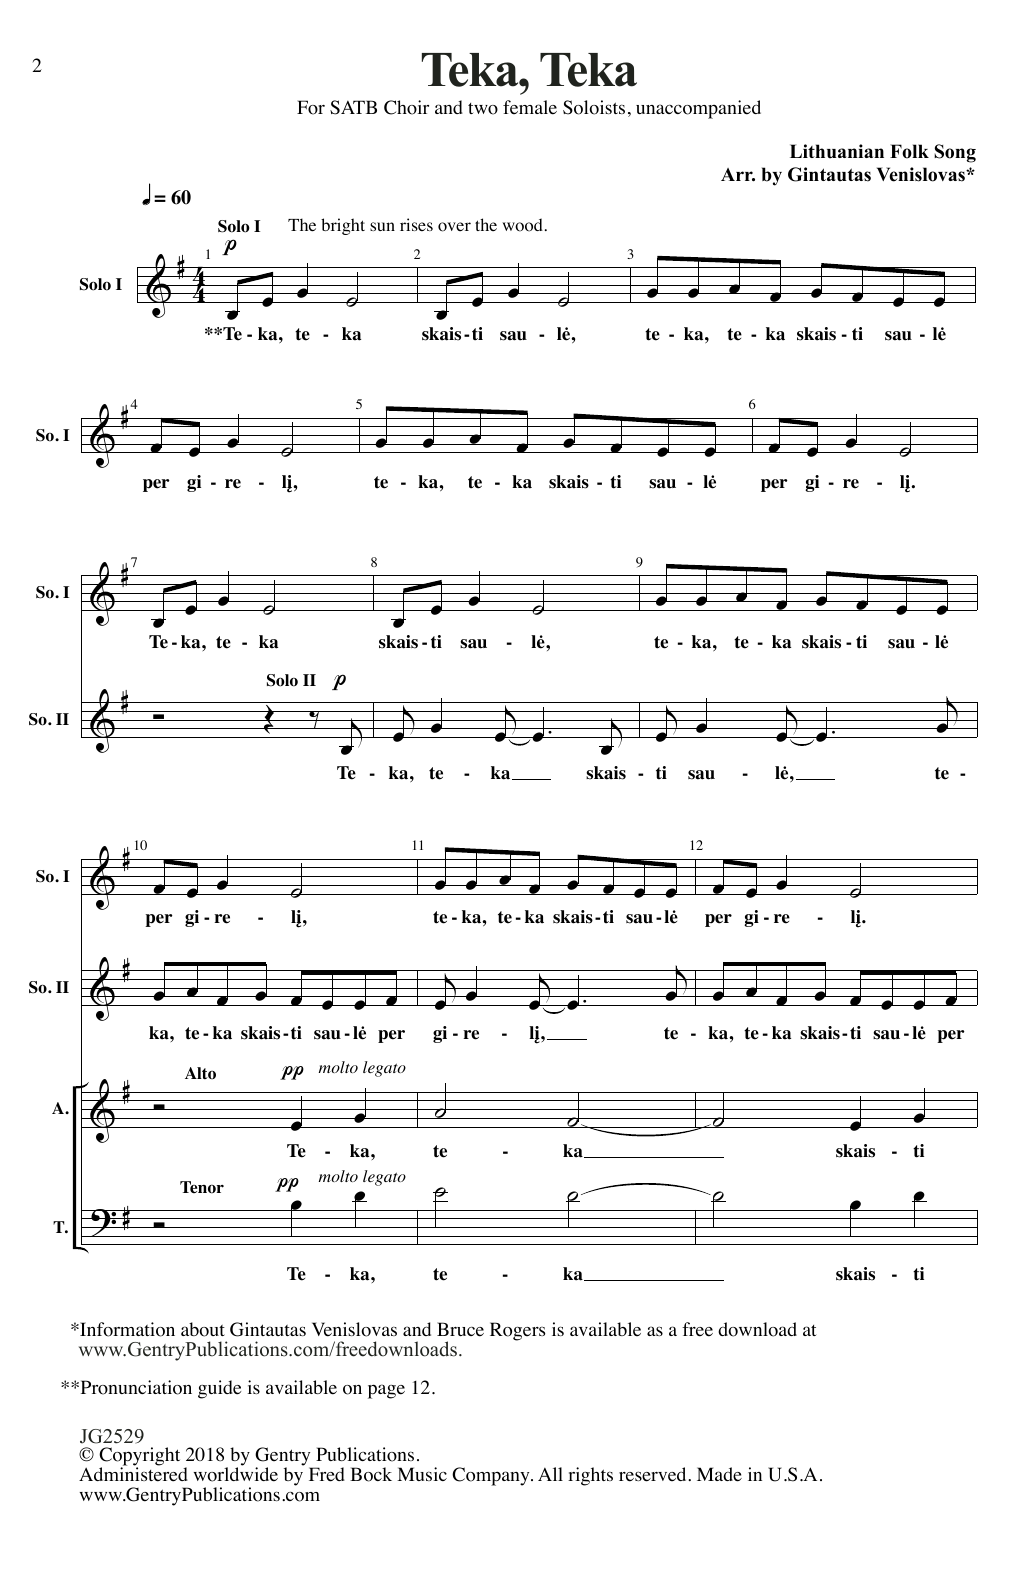 Lithuanian Folk Song Teka, Teka (arr. Gintautas Venislovas) Sheet Music Notes & Chords for SATB Choir - Download or Print PDF